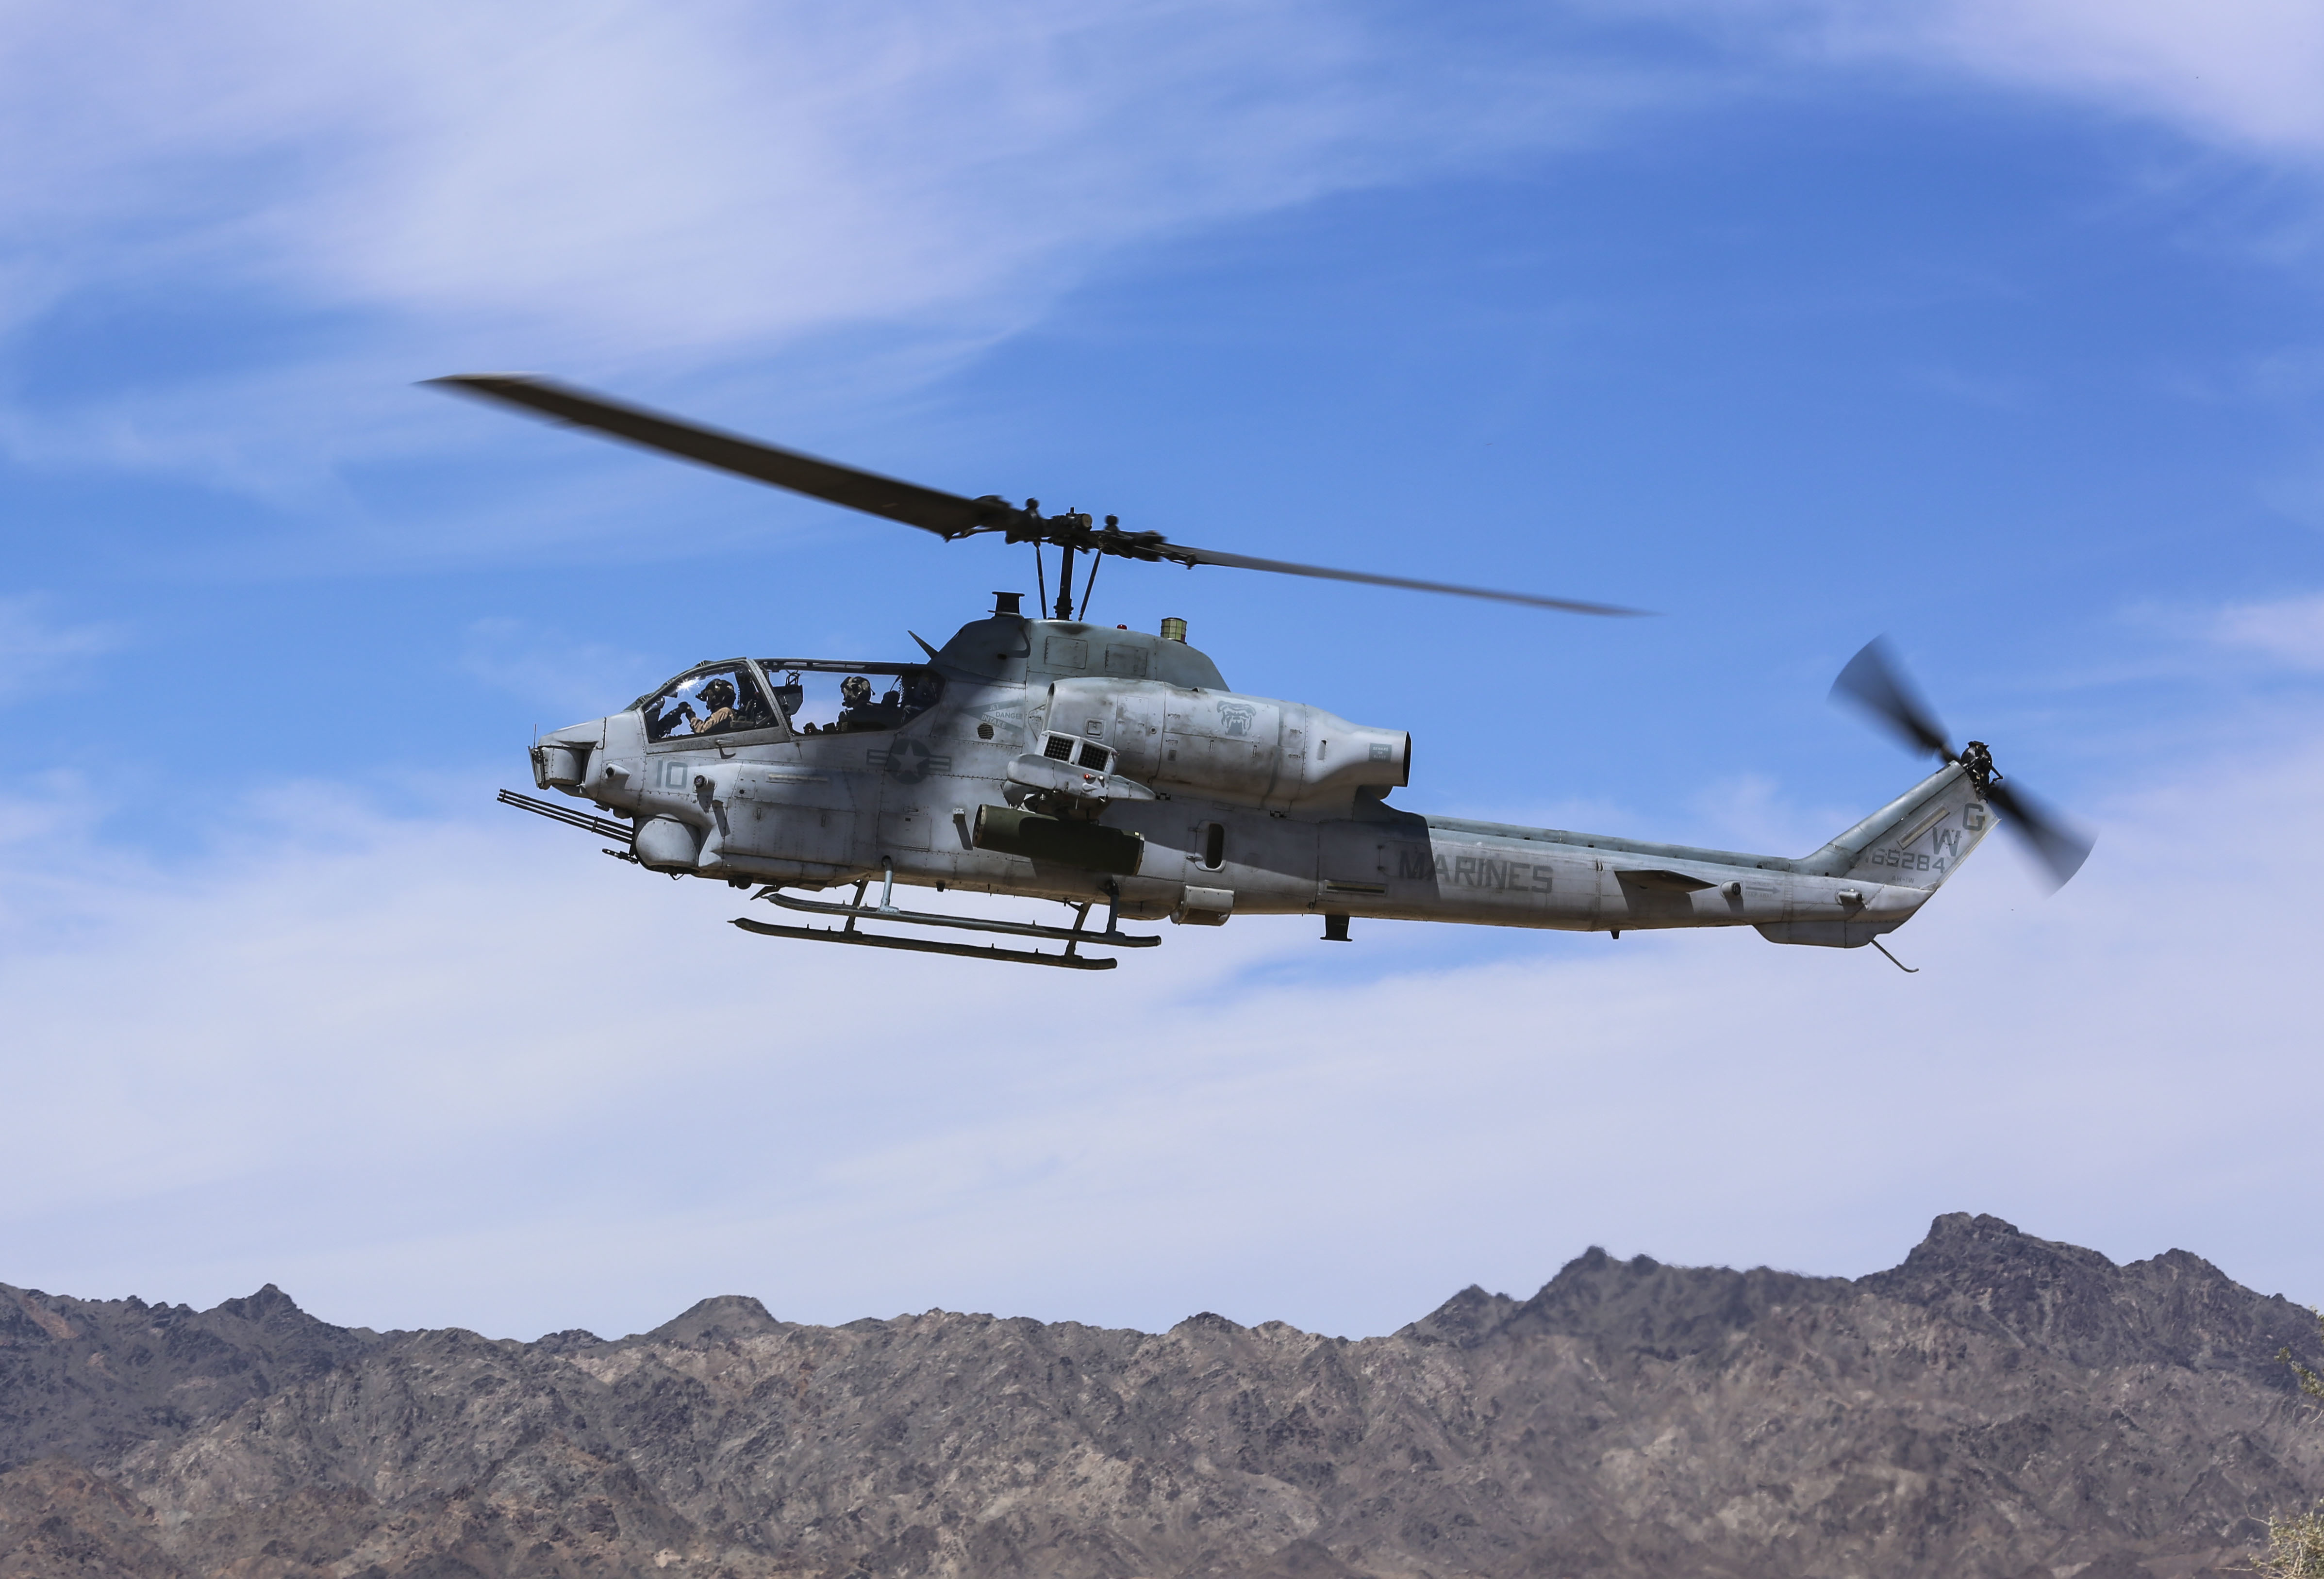 Американские военные вертолеты. Ah-1z Viper Pilots. Хеликоптер Аризона. Bell Ah-1z Viper вар Тандер. Военные вертолеты США.